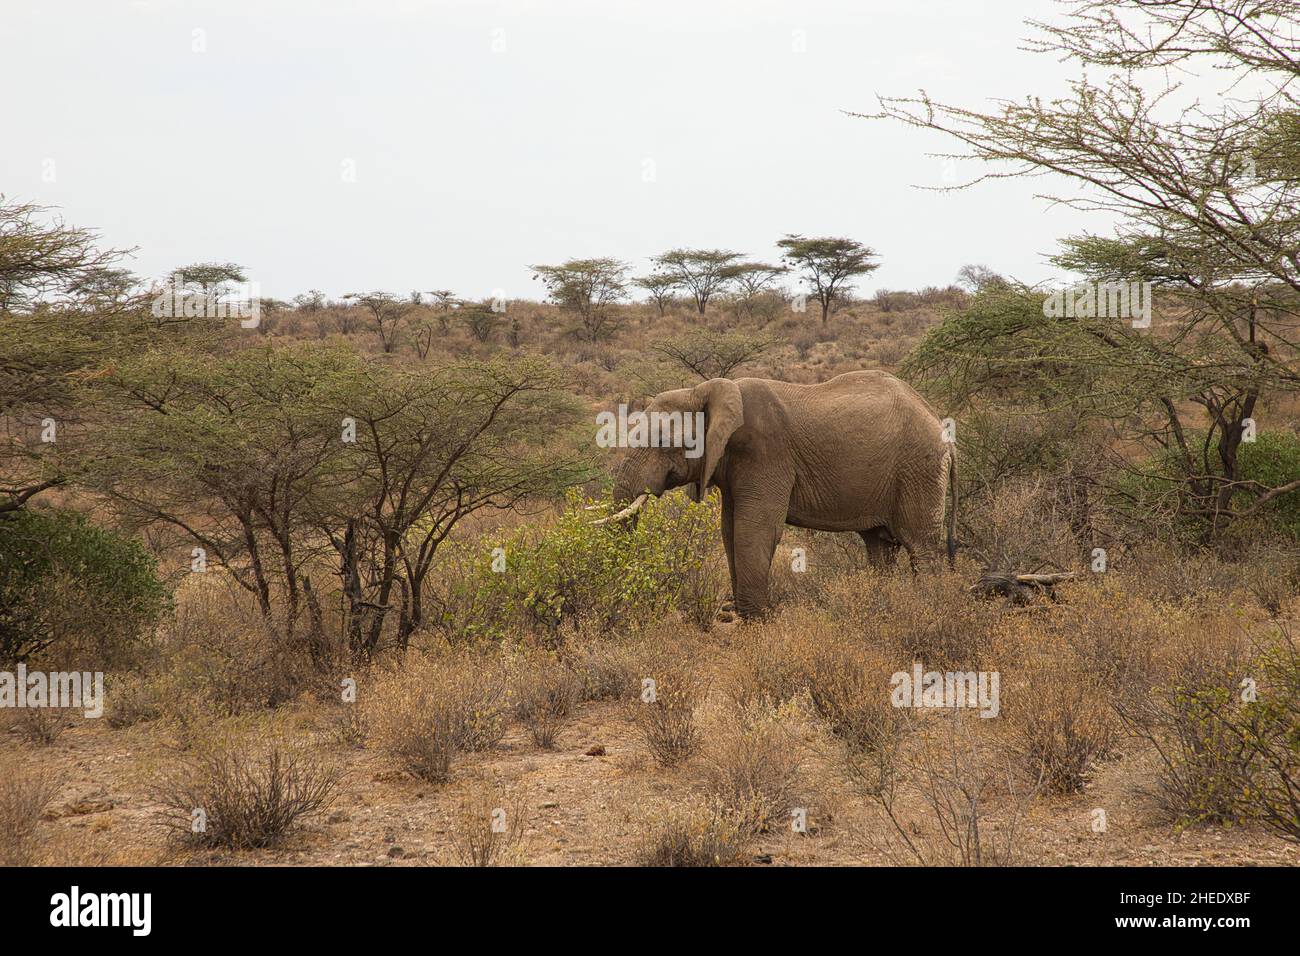 African elephant, Loxodonta africana, in the landscape of the Samburu National Reserve in Kenya. Stock Photo